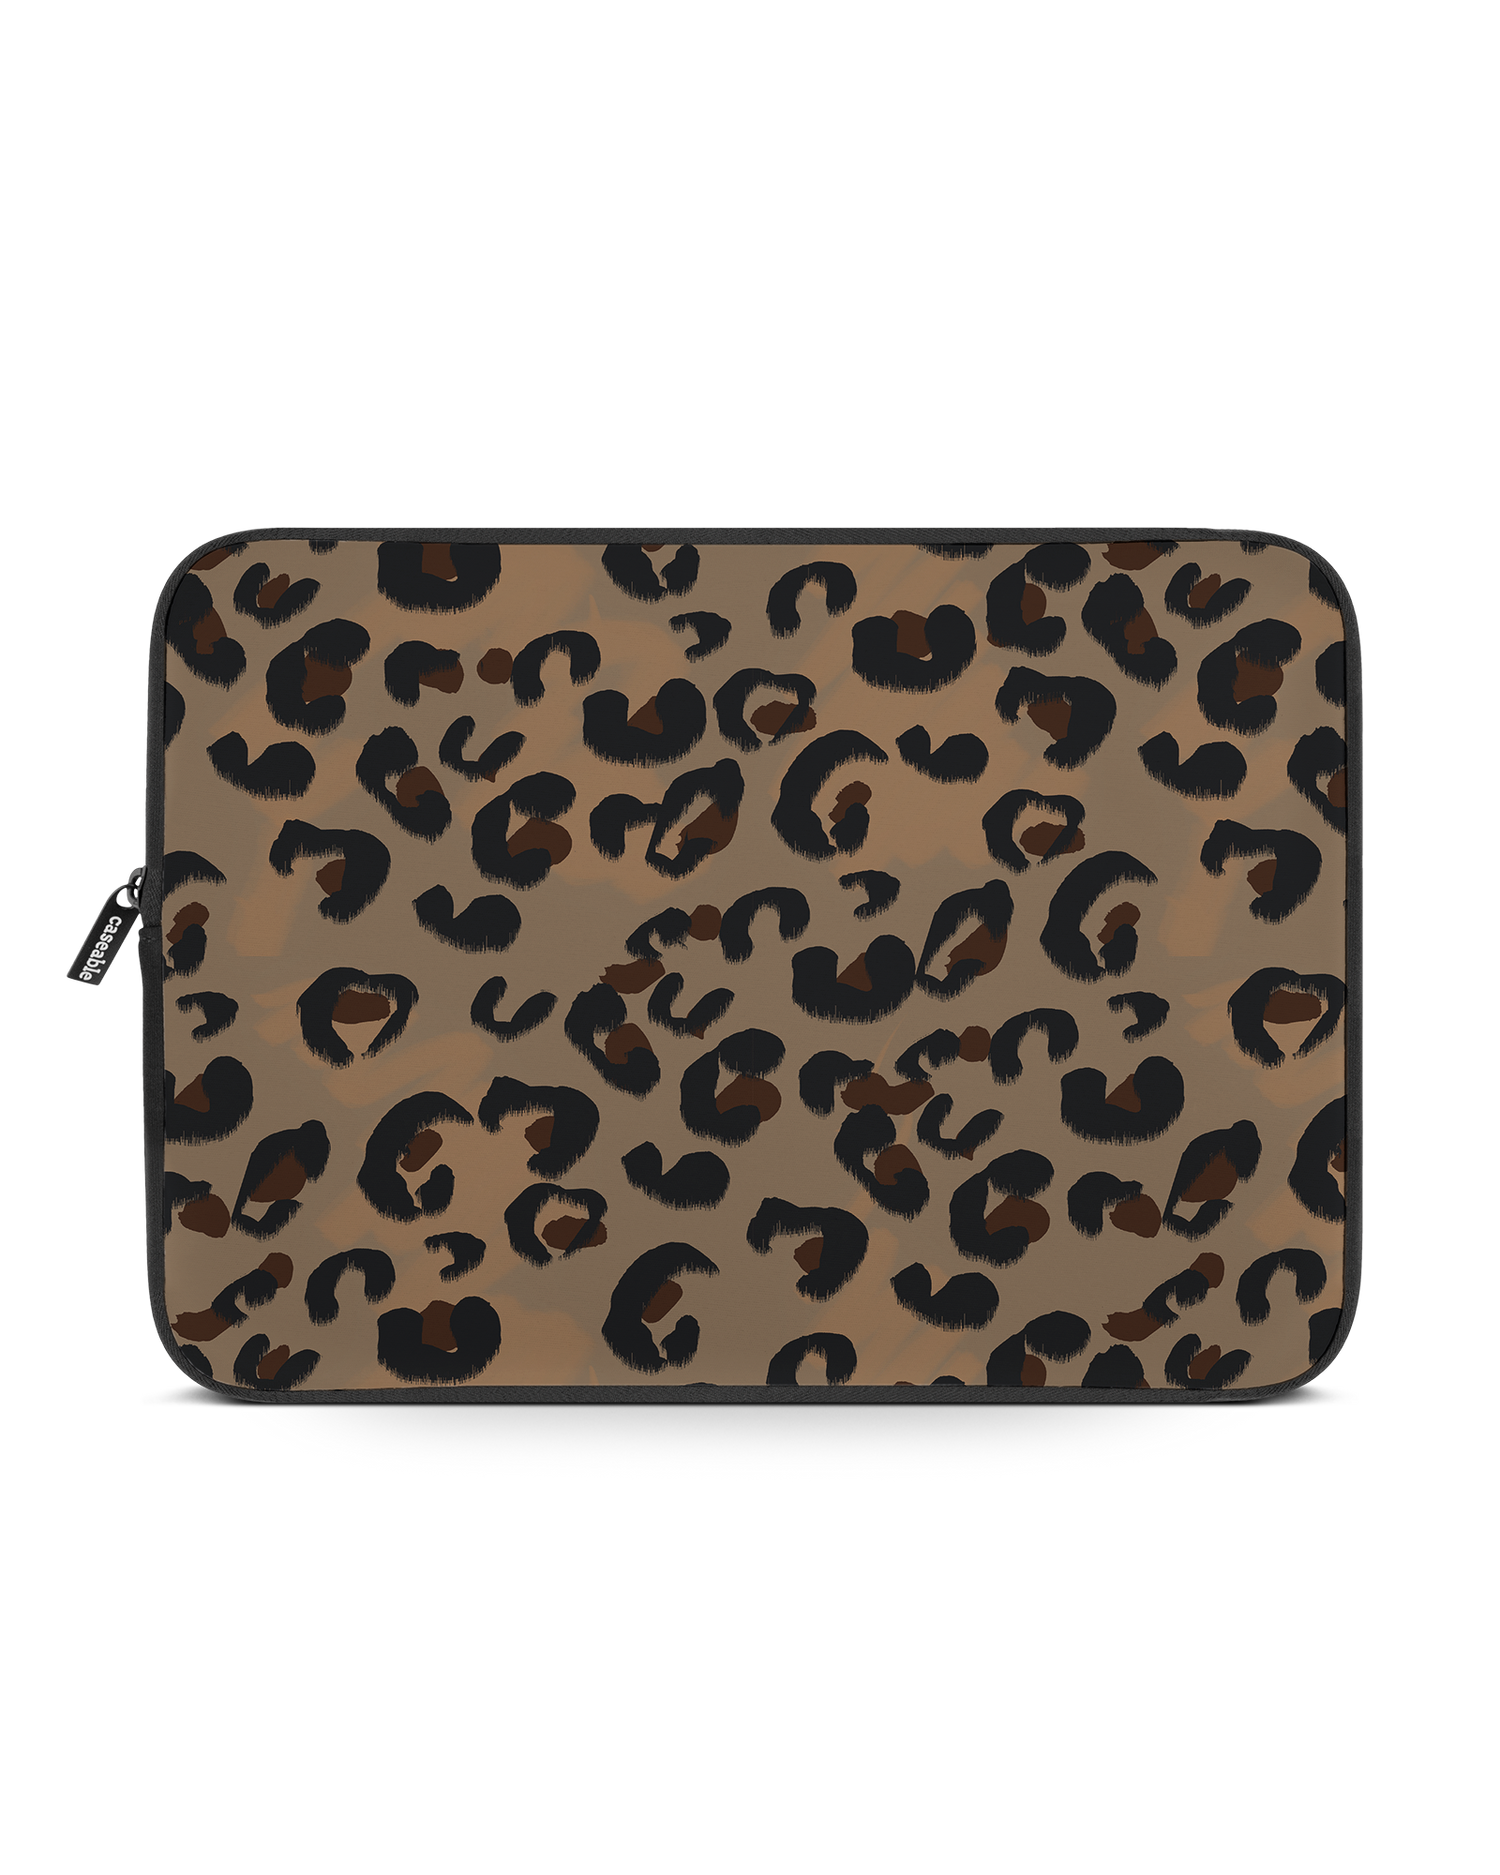 Leopard Repeat Laptop Case 14-15 inch: Front View